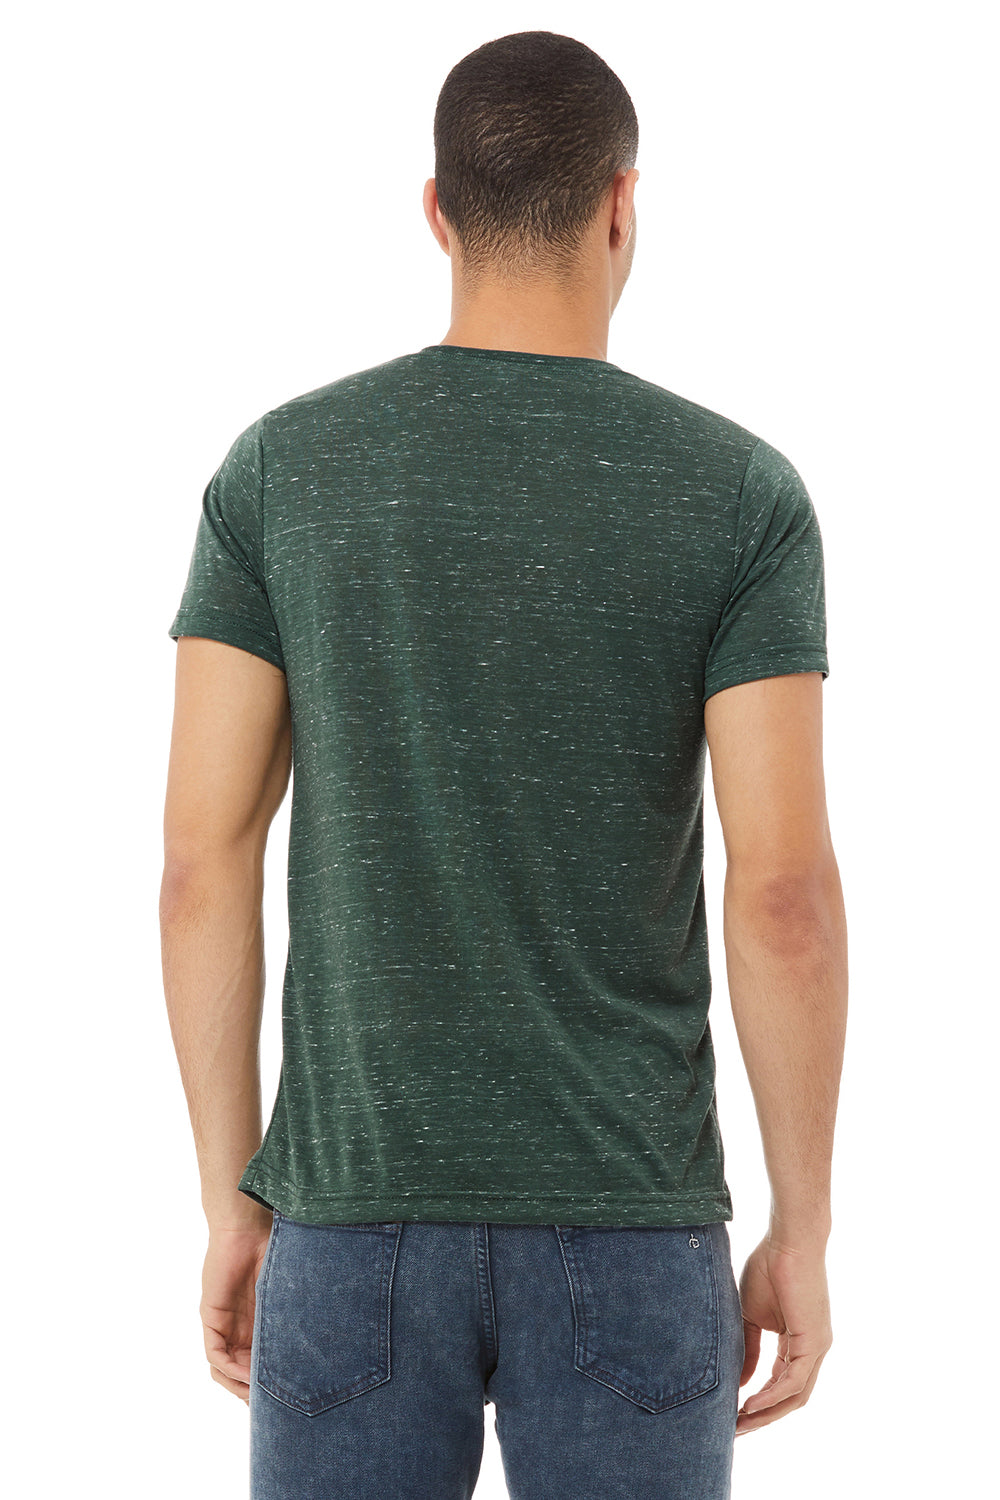 Bella + Canvas BC3005/3005/3655C Mens Jersey Short Sleeve V-Neck T-Shirt Forest Green Marble Model Back